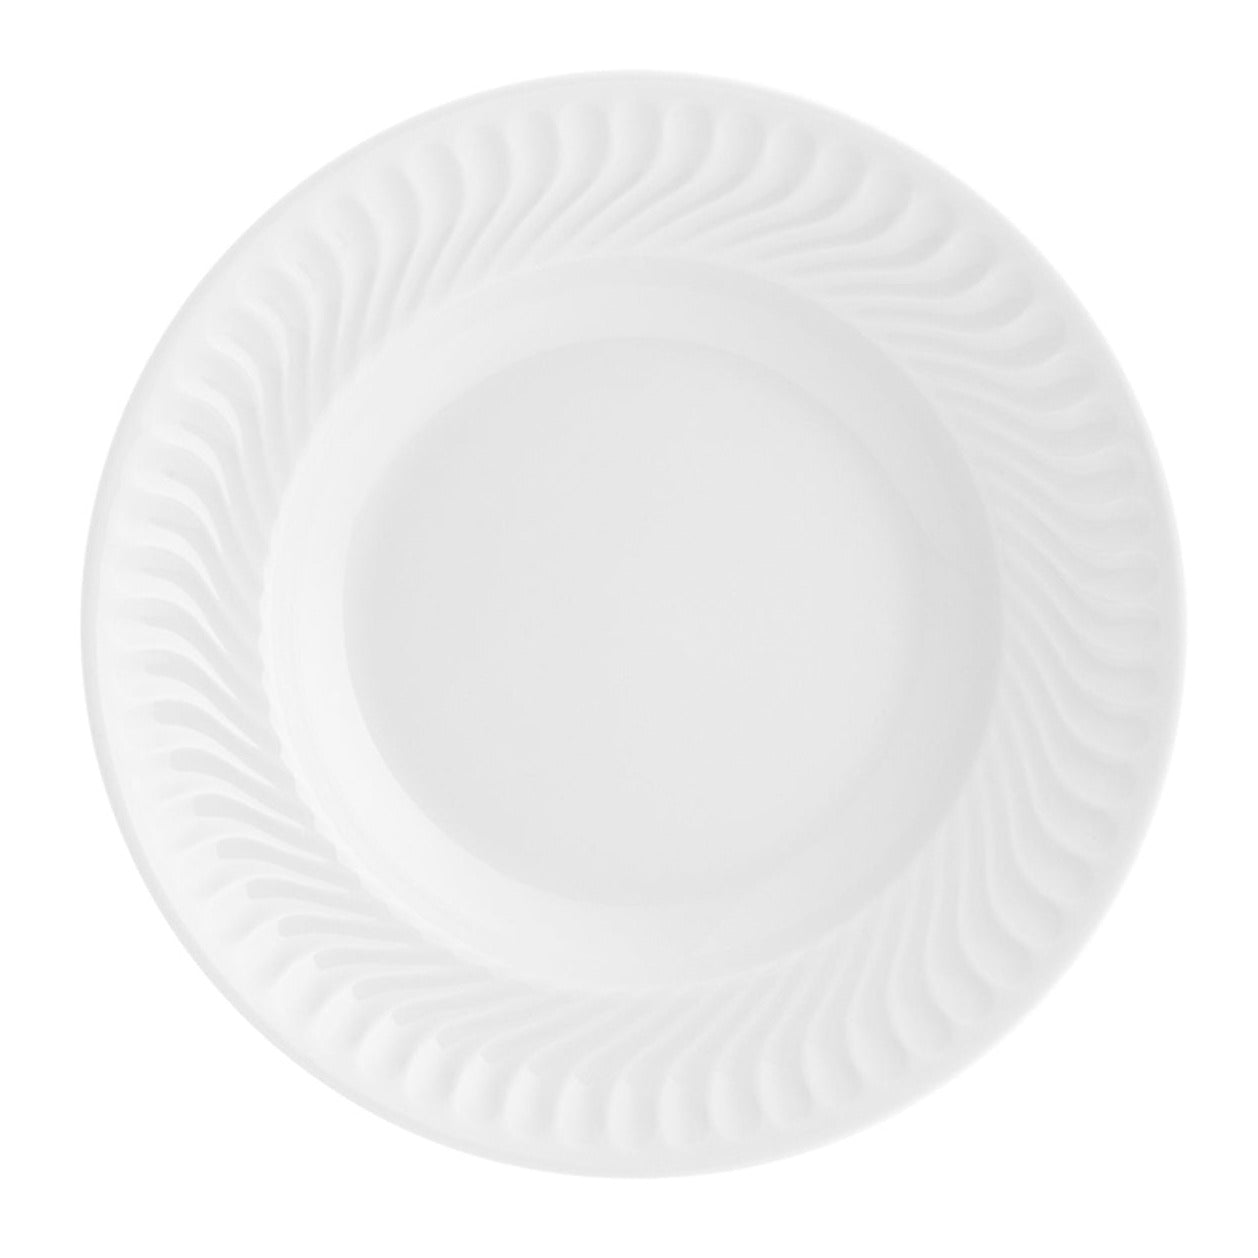 Sagres - Soup Plate (4 plates) - LAZADO